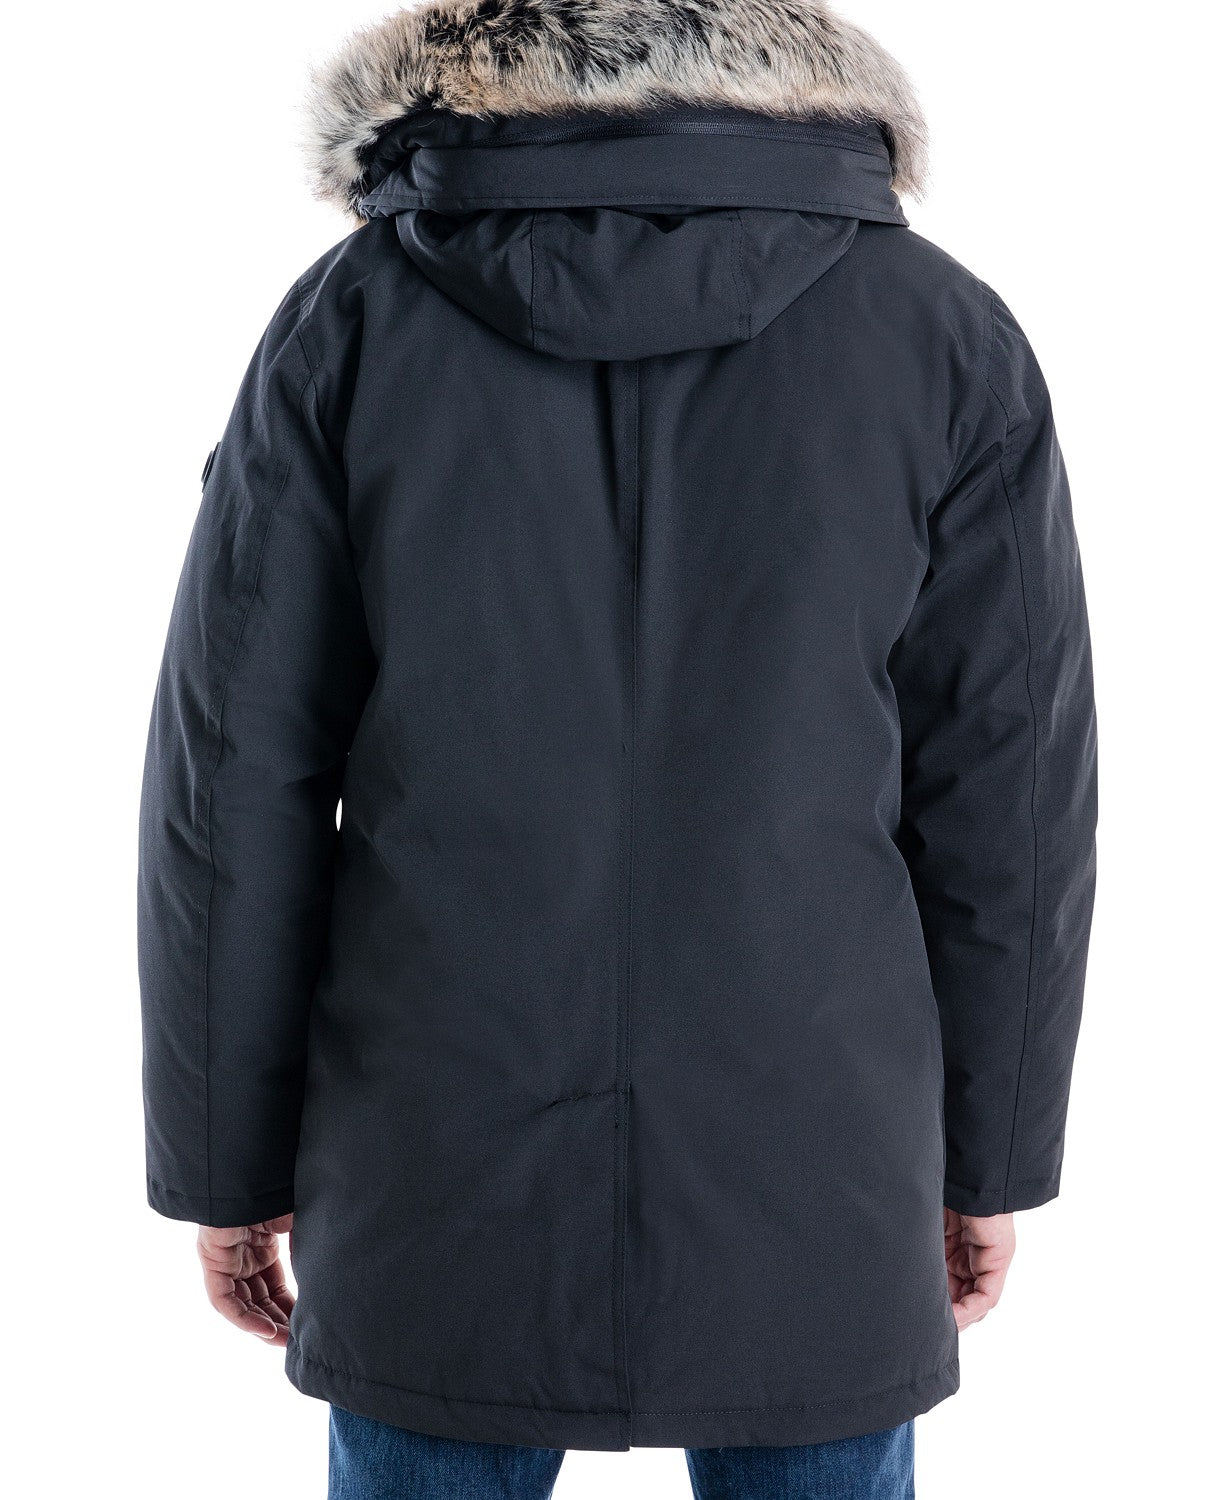 Michael Kors Men's Hooded Bib Snorkel Parka Coat Large Black